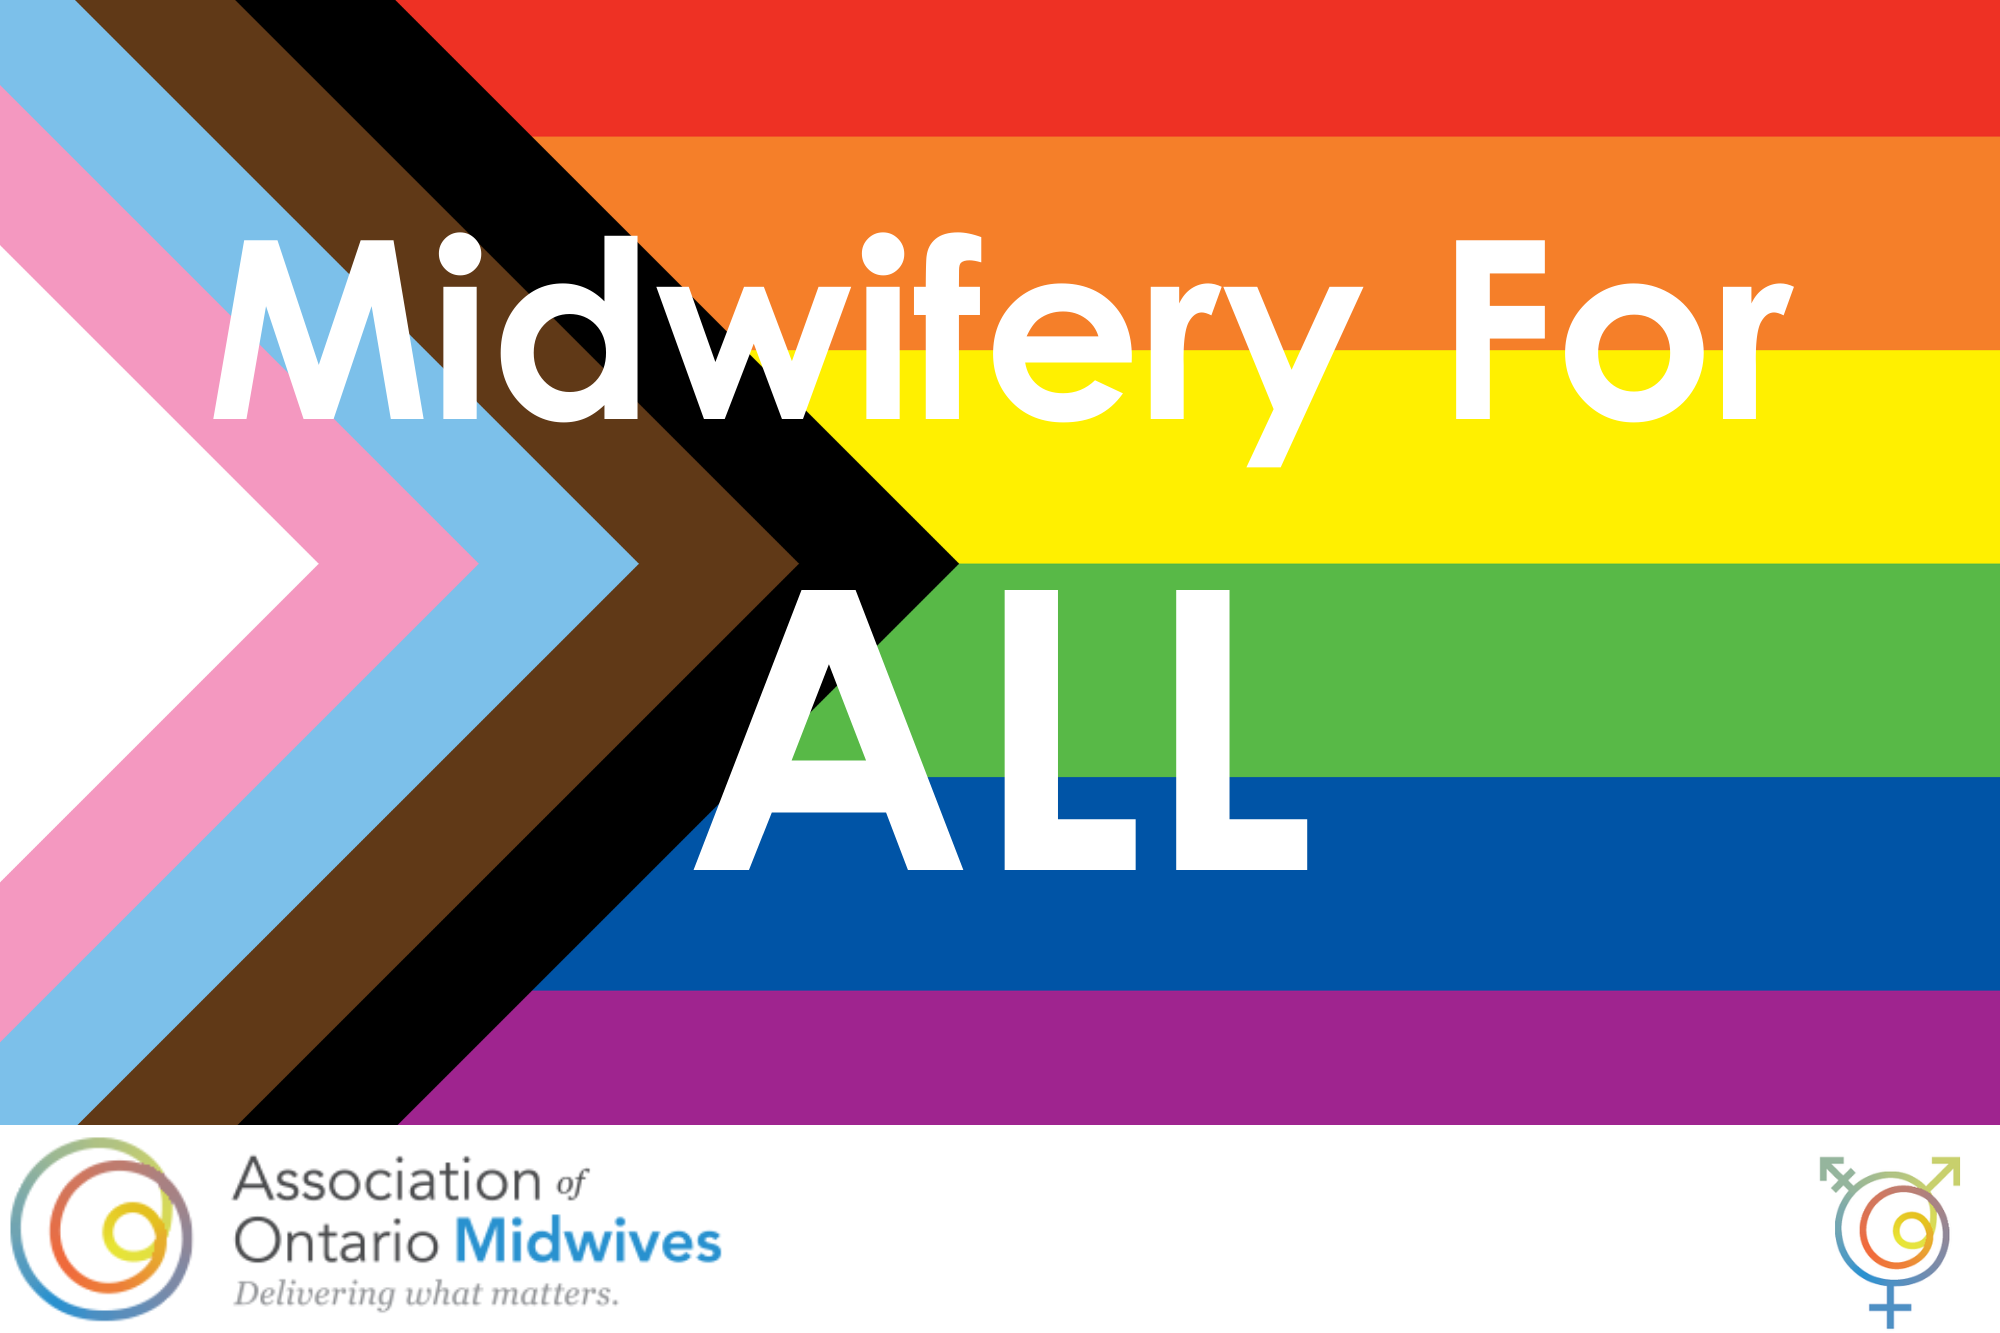 Progress Pride rainbow flag featuring text "MIdwifery for ALL" and AOM logo + AOM gender inclusivity logo